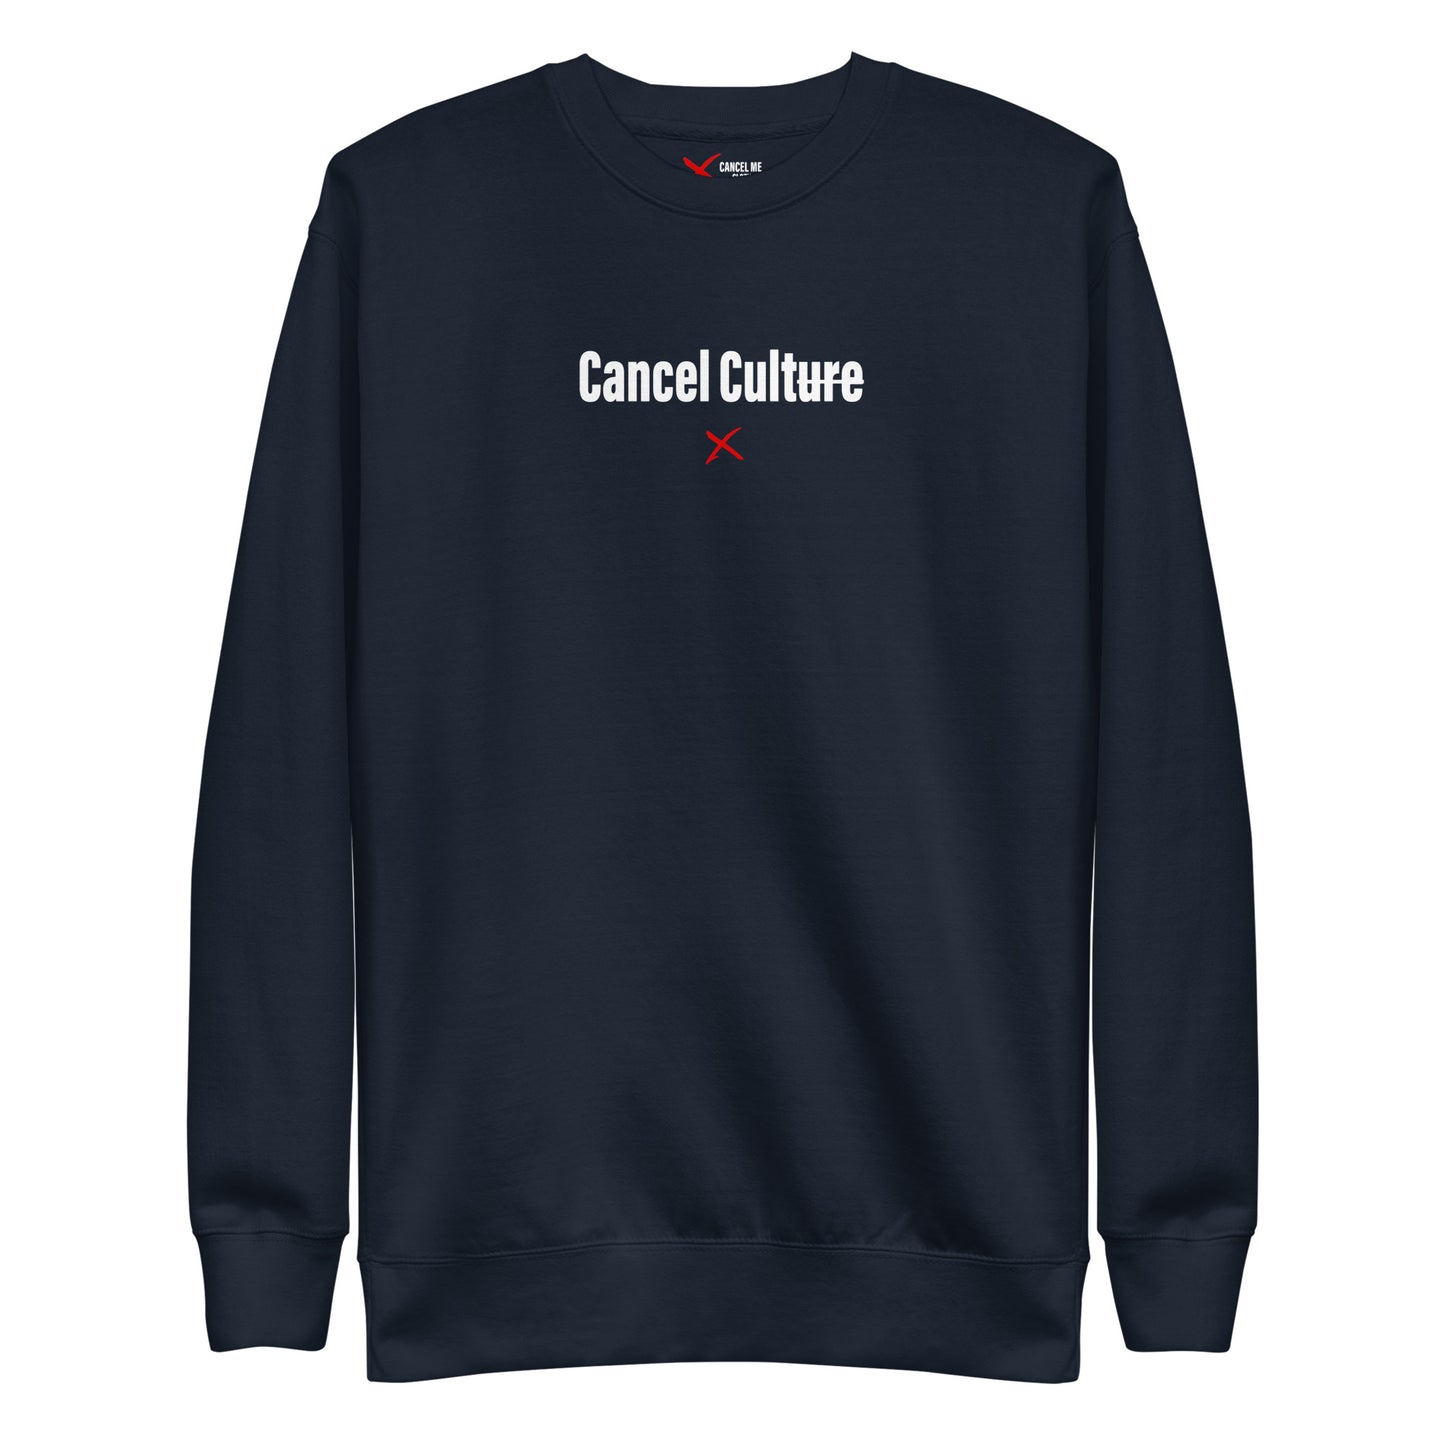 Cancel Culture - Sweatshirt